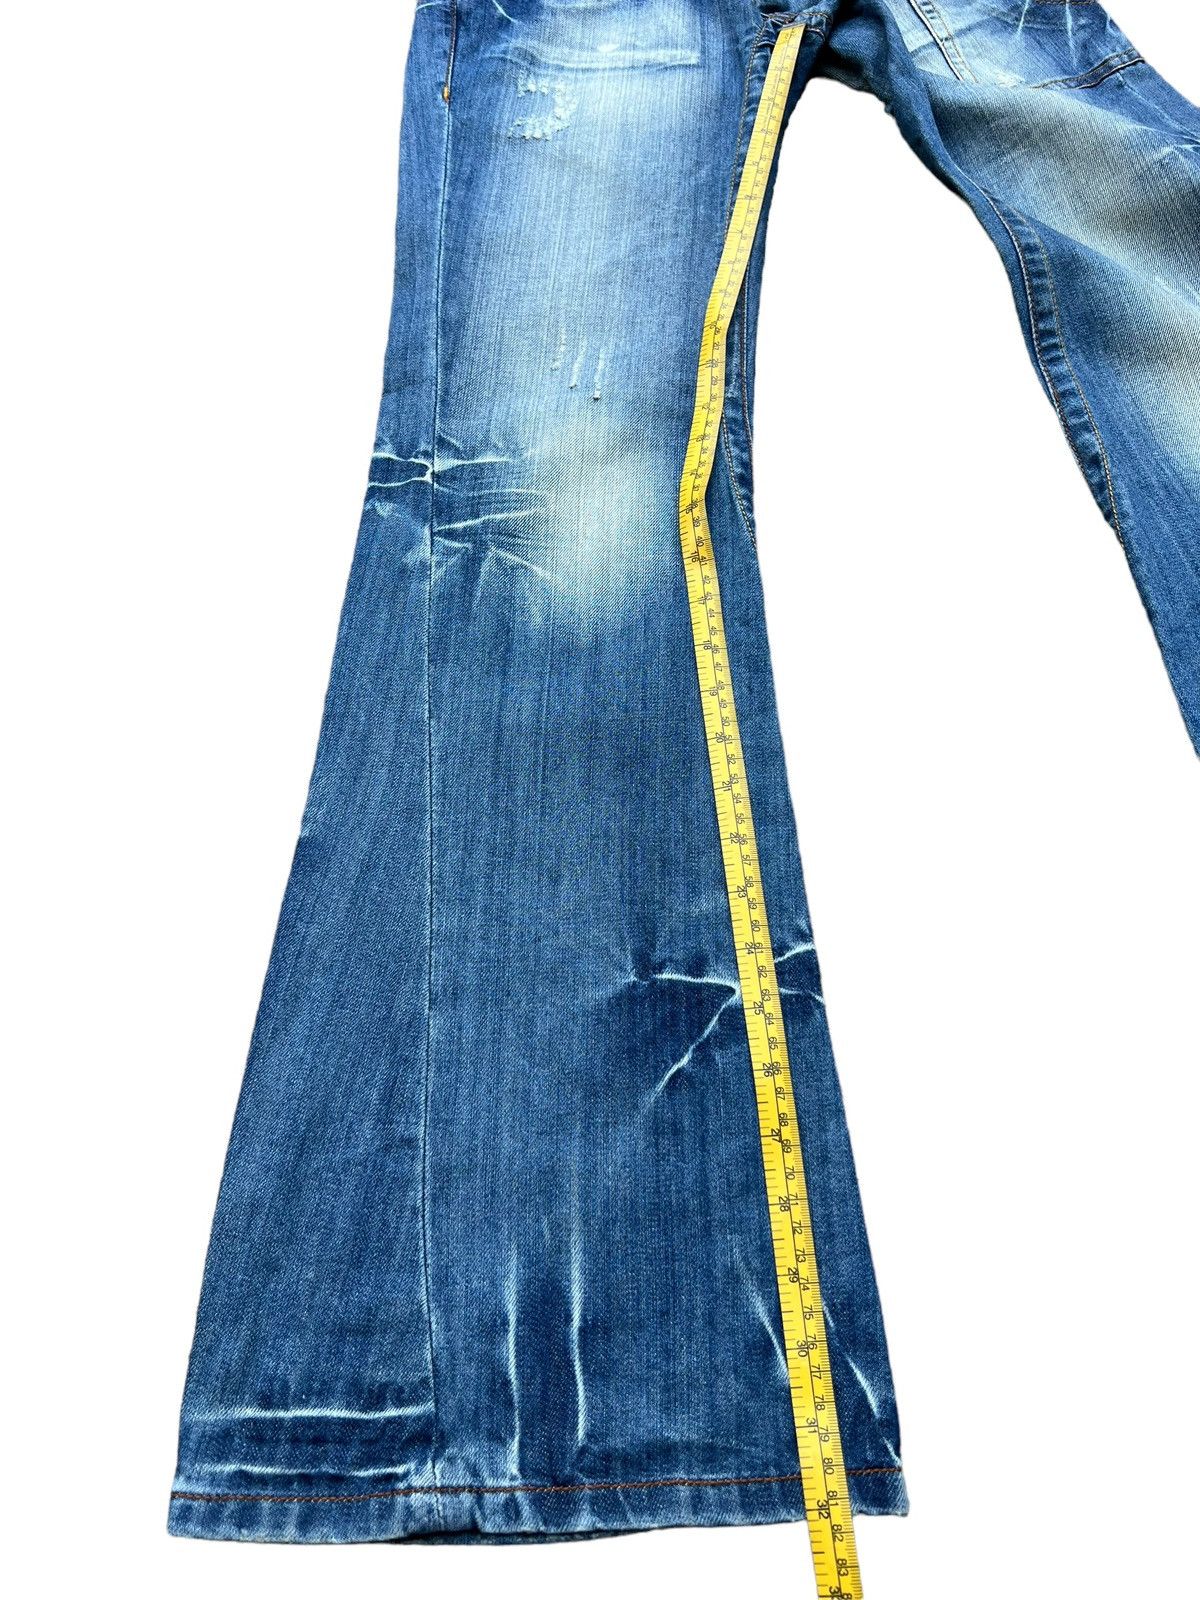 Hype - Drive Mud Wash Distressed Lowrise Denim Flare Jeans 28x32 - 12